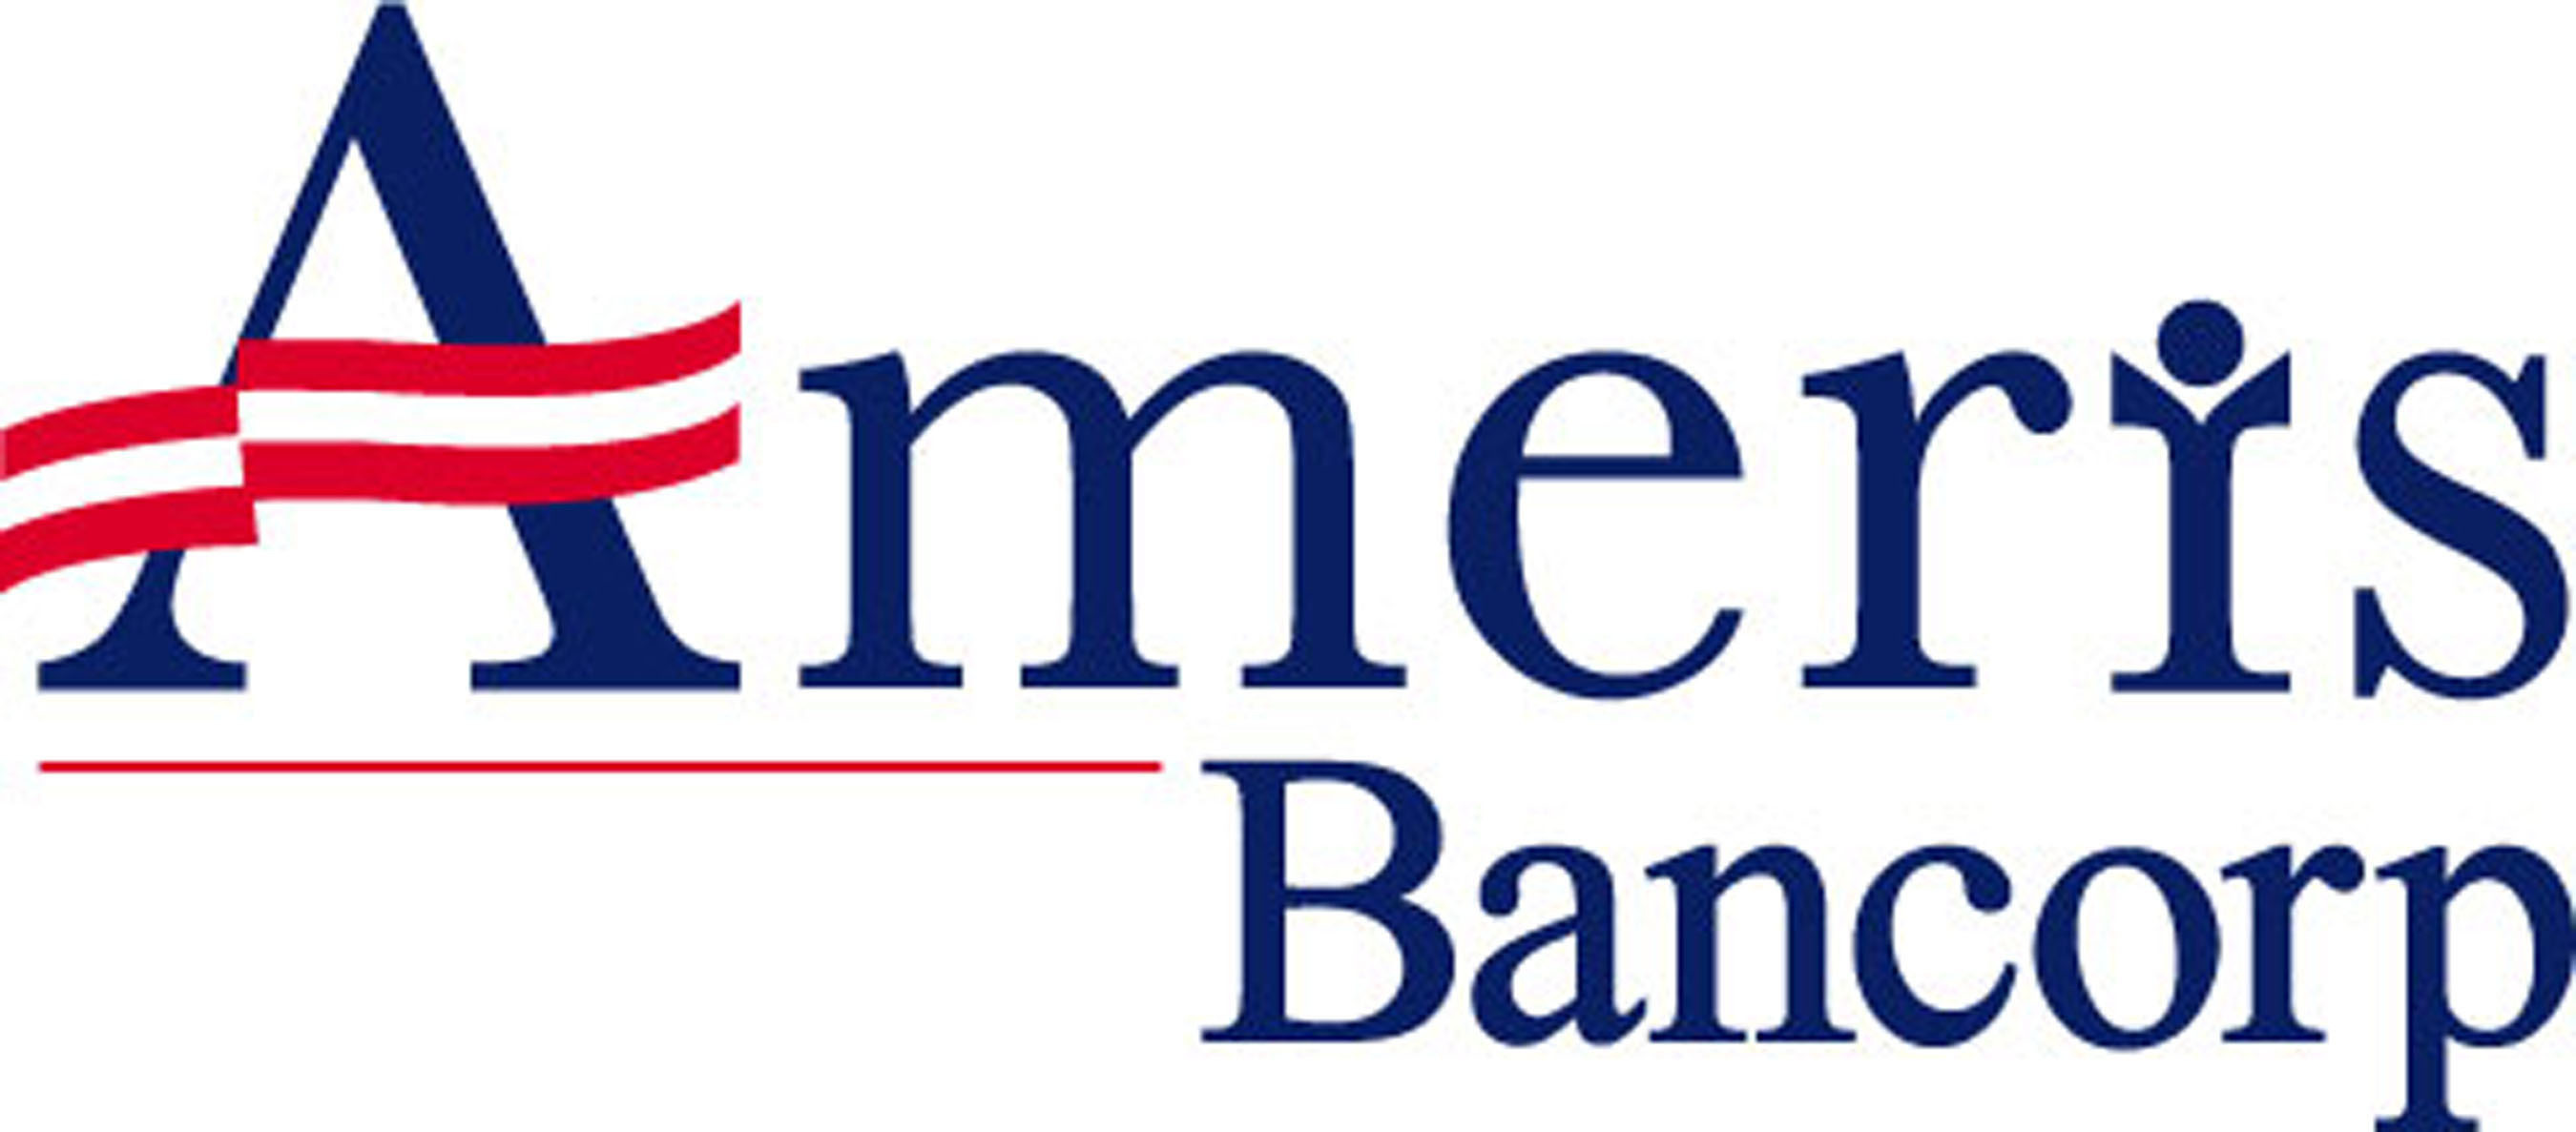 Ameris Bancorp logo.